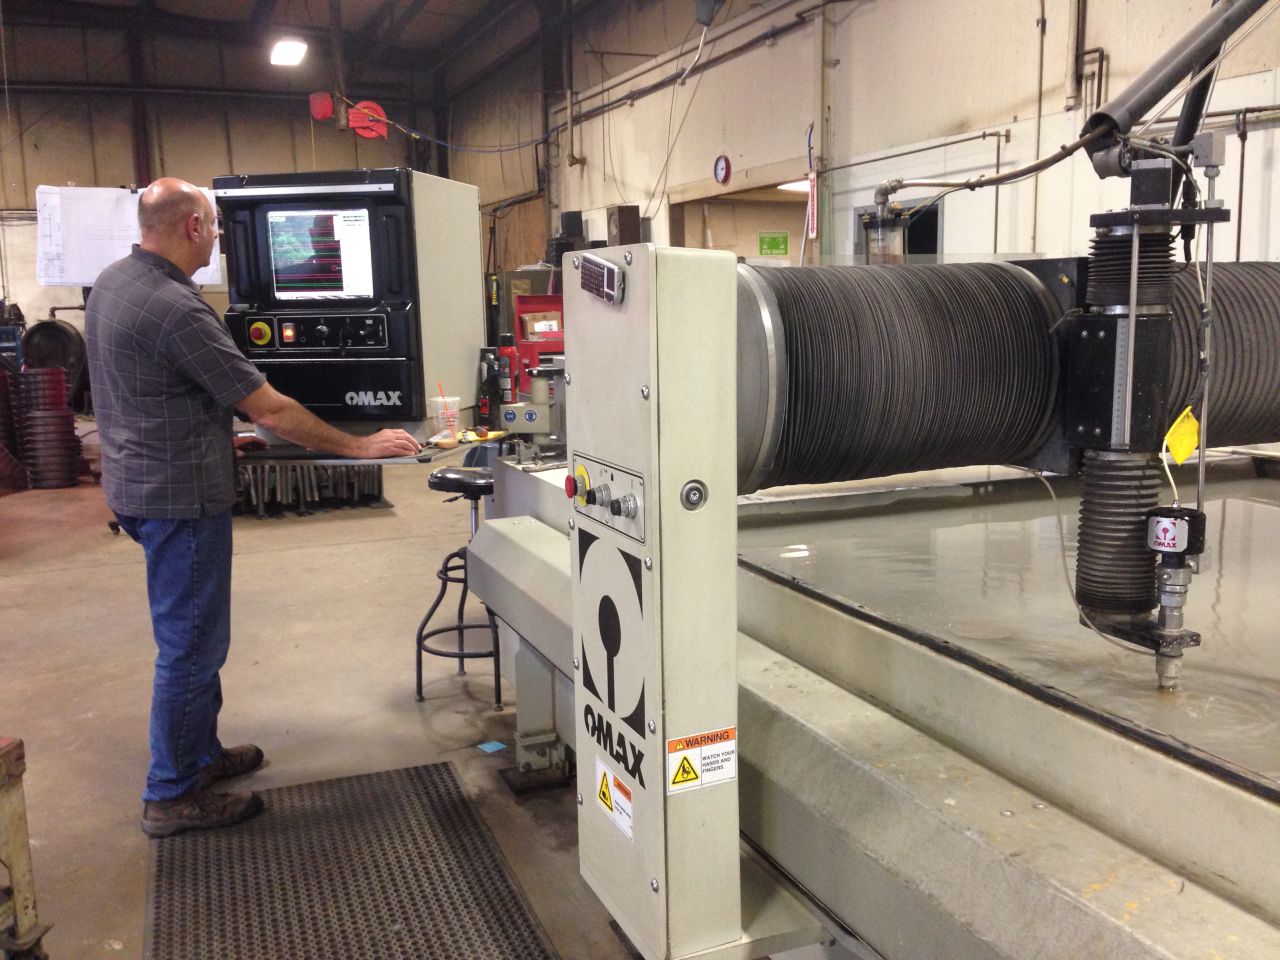 Mark Fisher in his metal fabrication company in Auburn. (Curt Nickisch/WBUR)